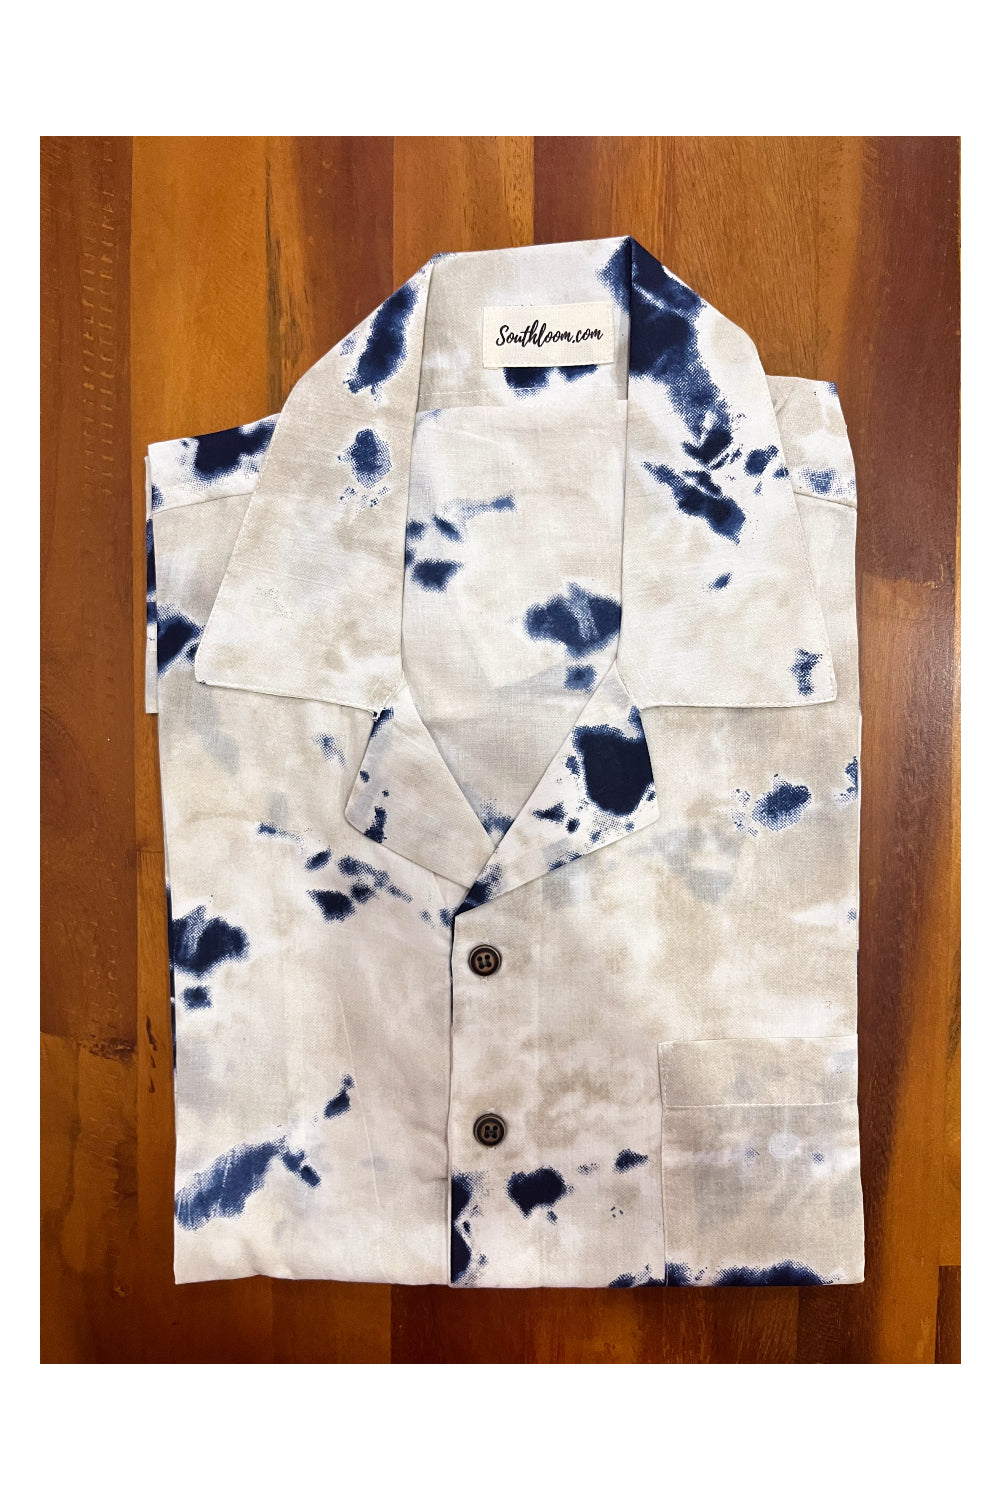 Southloom Jaipur Cotton White Blue Hand Block Printed Cuban Collar Shirt (Half Sleeves)